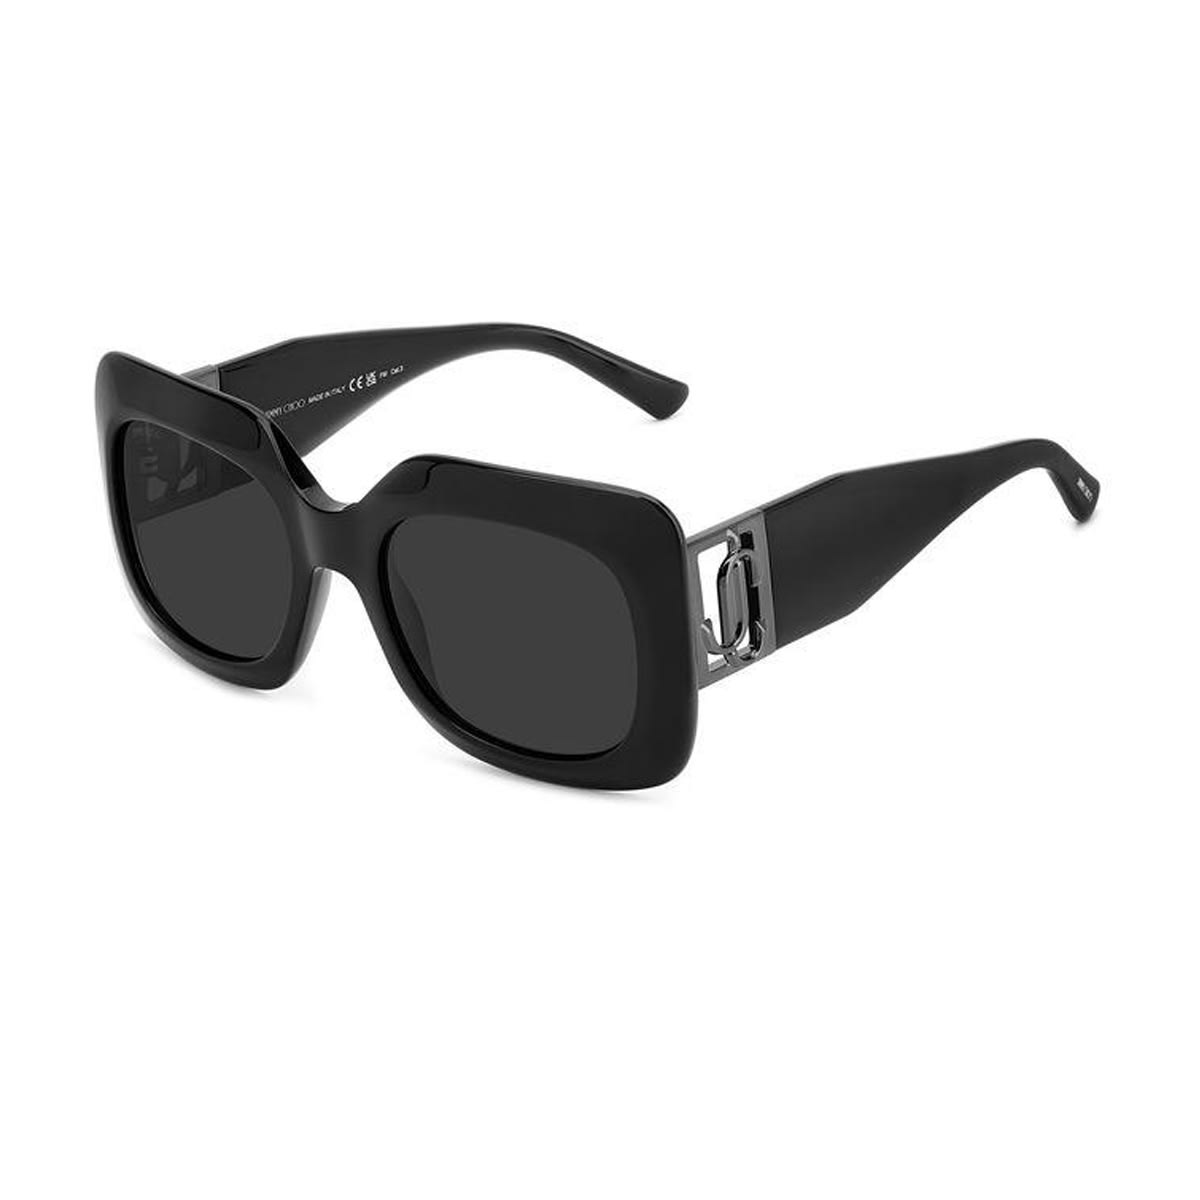 Jc Gaya/s 807/ir Black Sunglasses